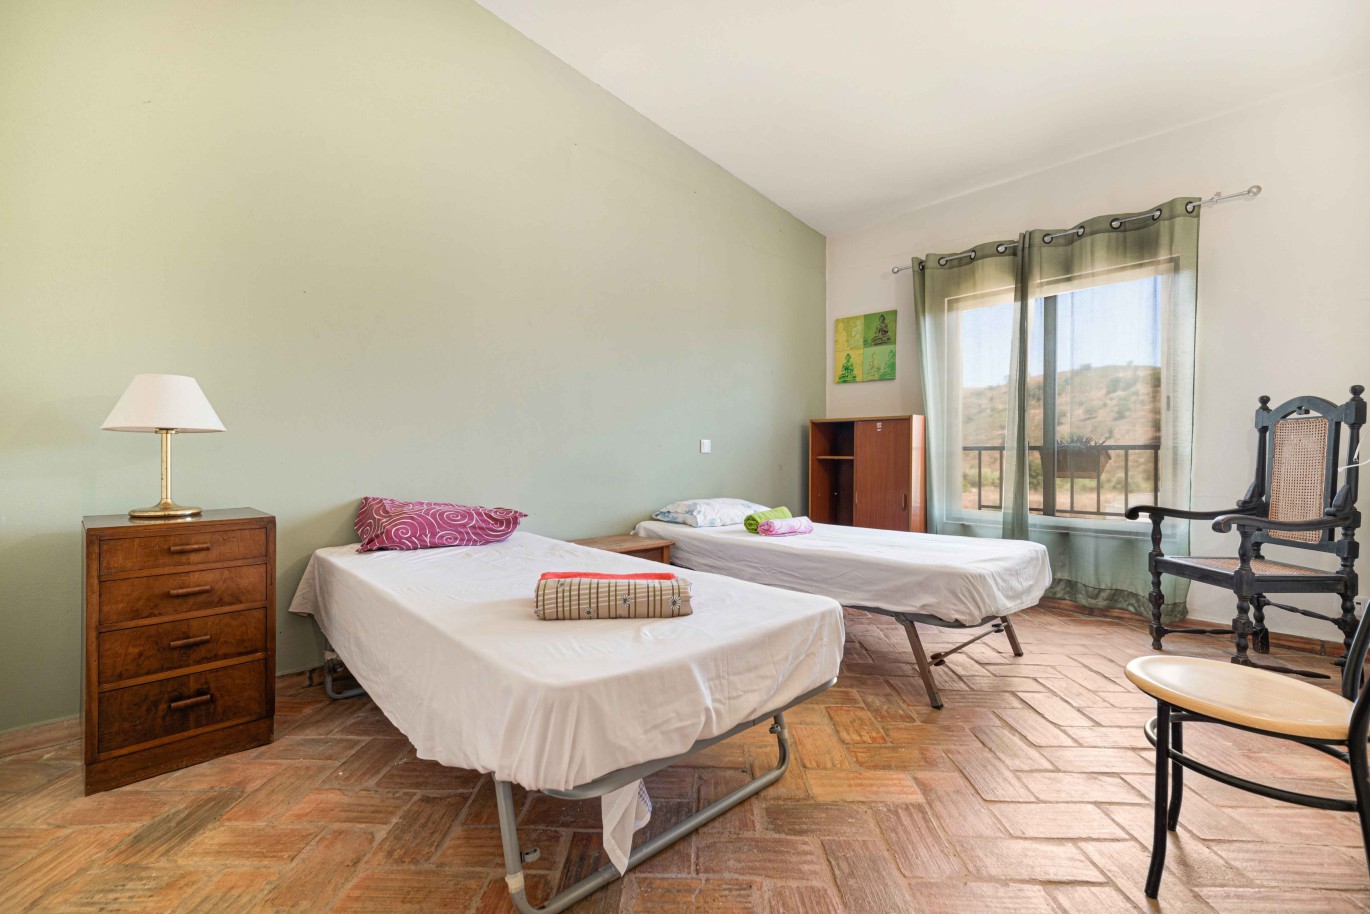 9 bedroom villa for sale in Pereira, Algarve_231606